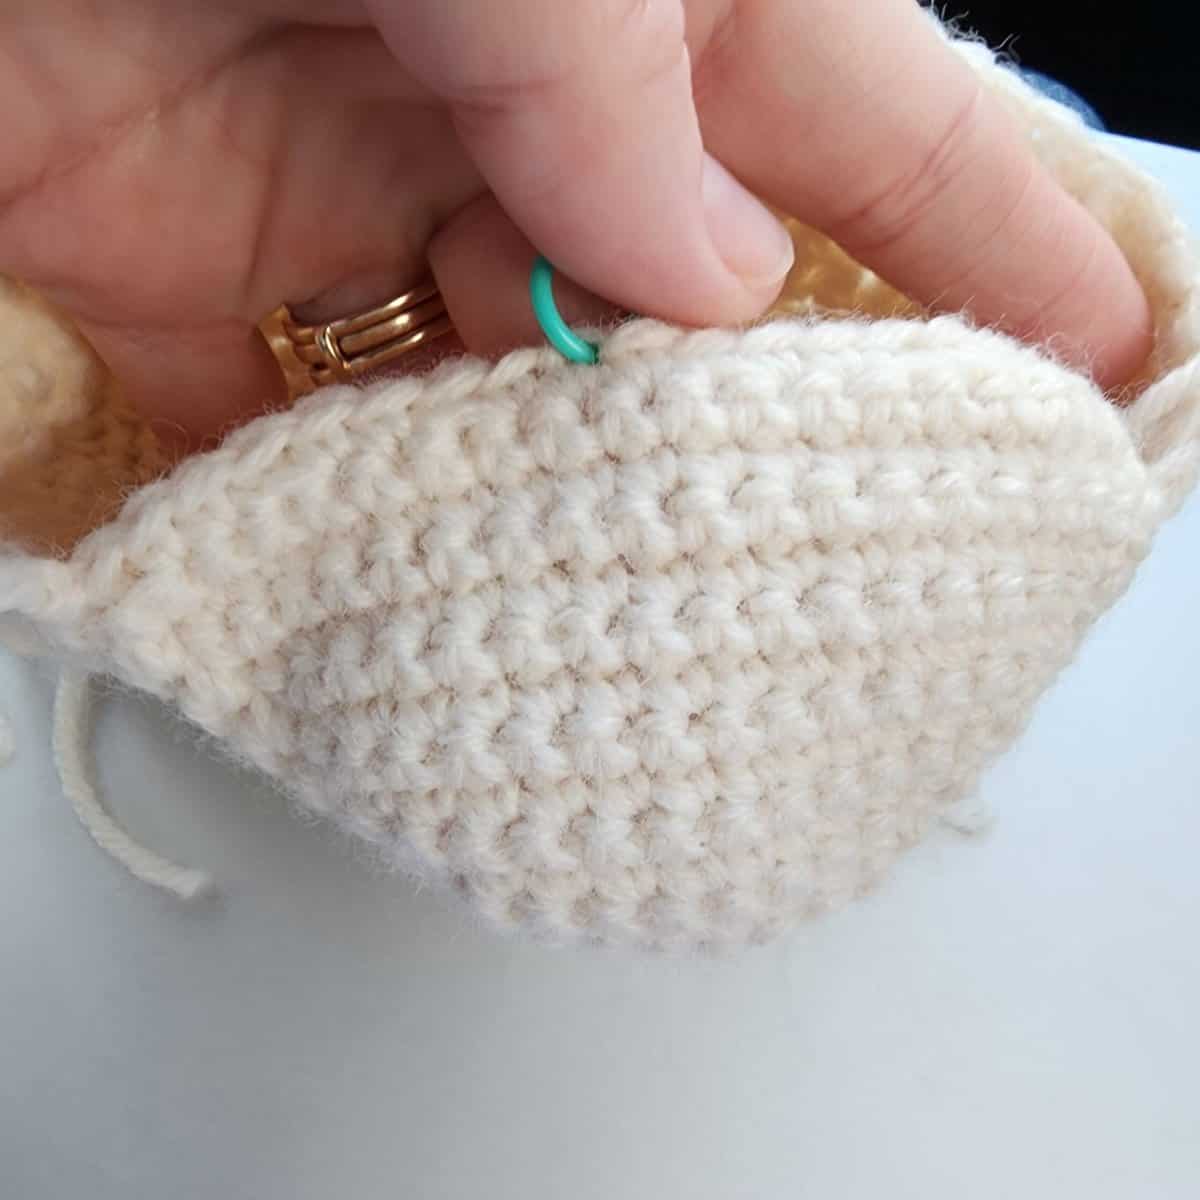 crochet stocking heel completed on cream Christmas crochet stocking